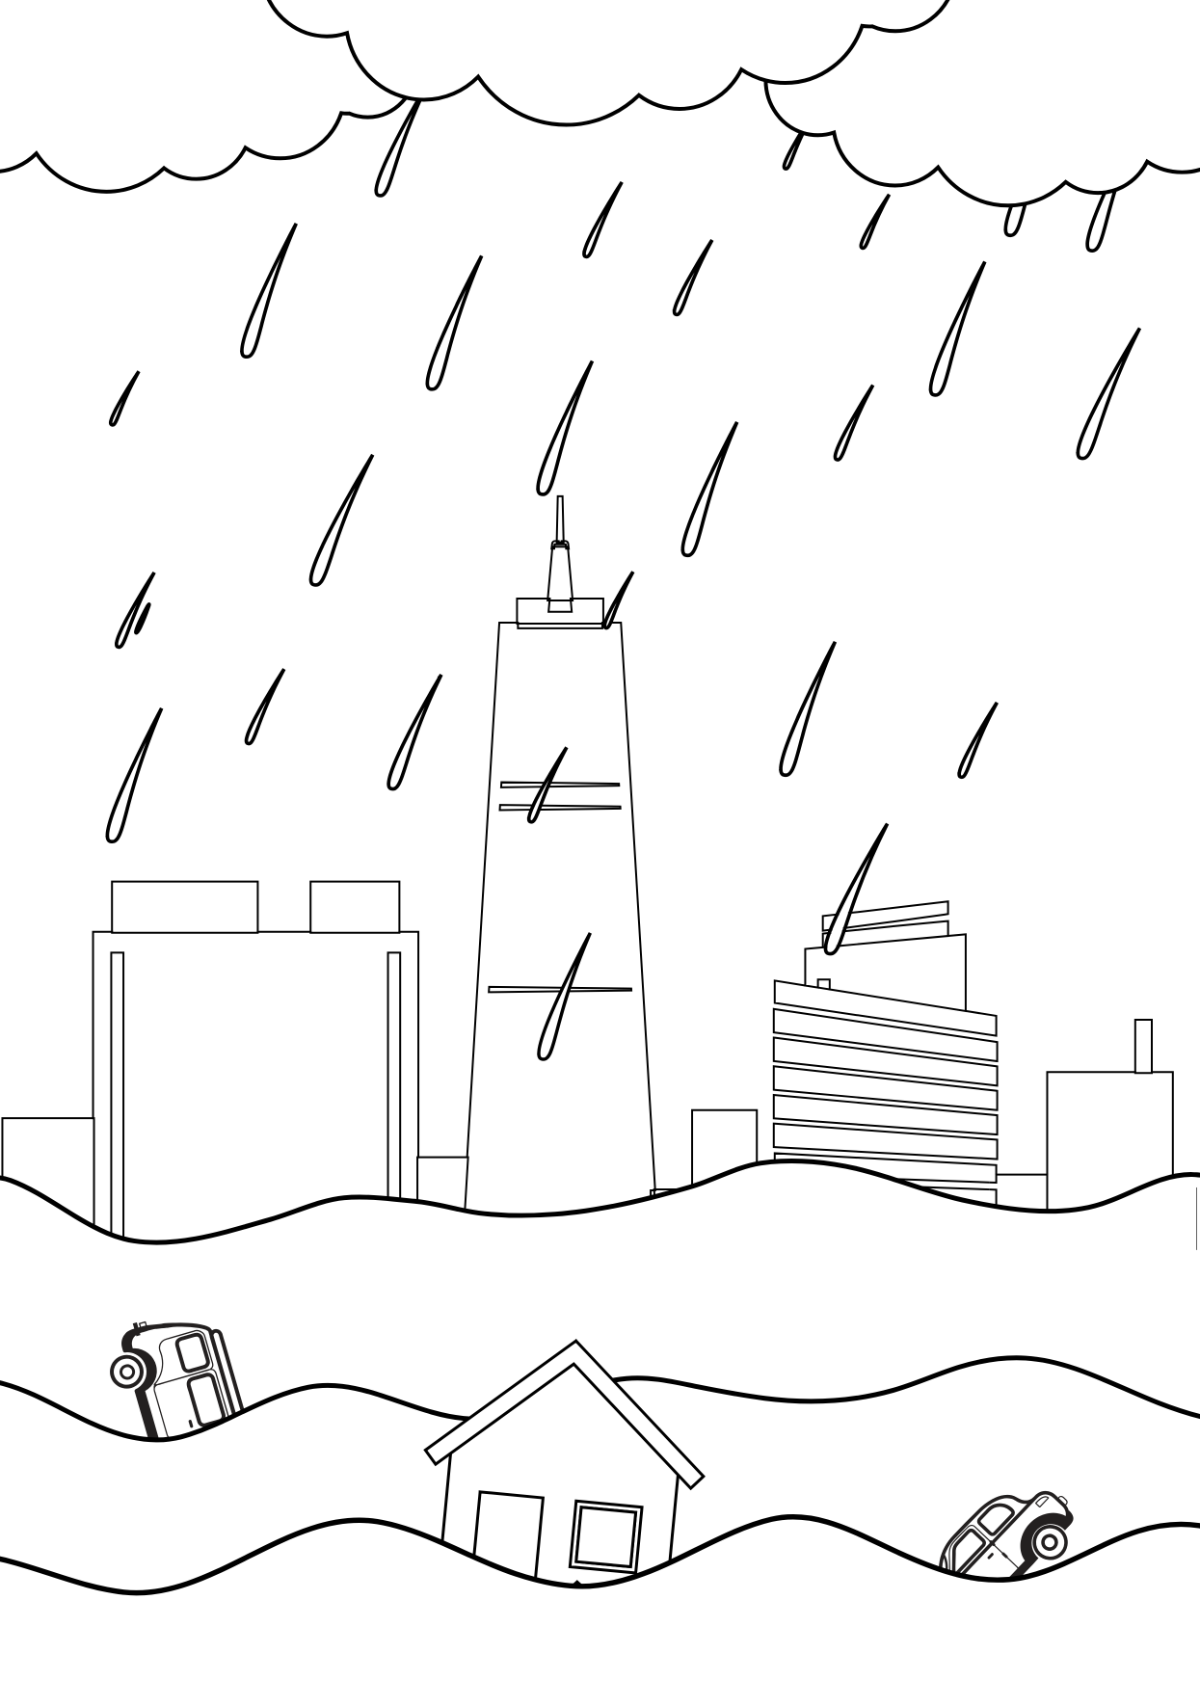 Flood water Vectors & Illustrations for Free Download | Freepik